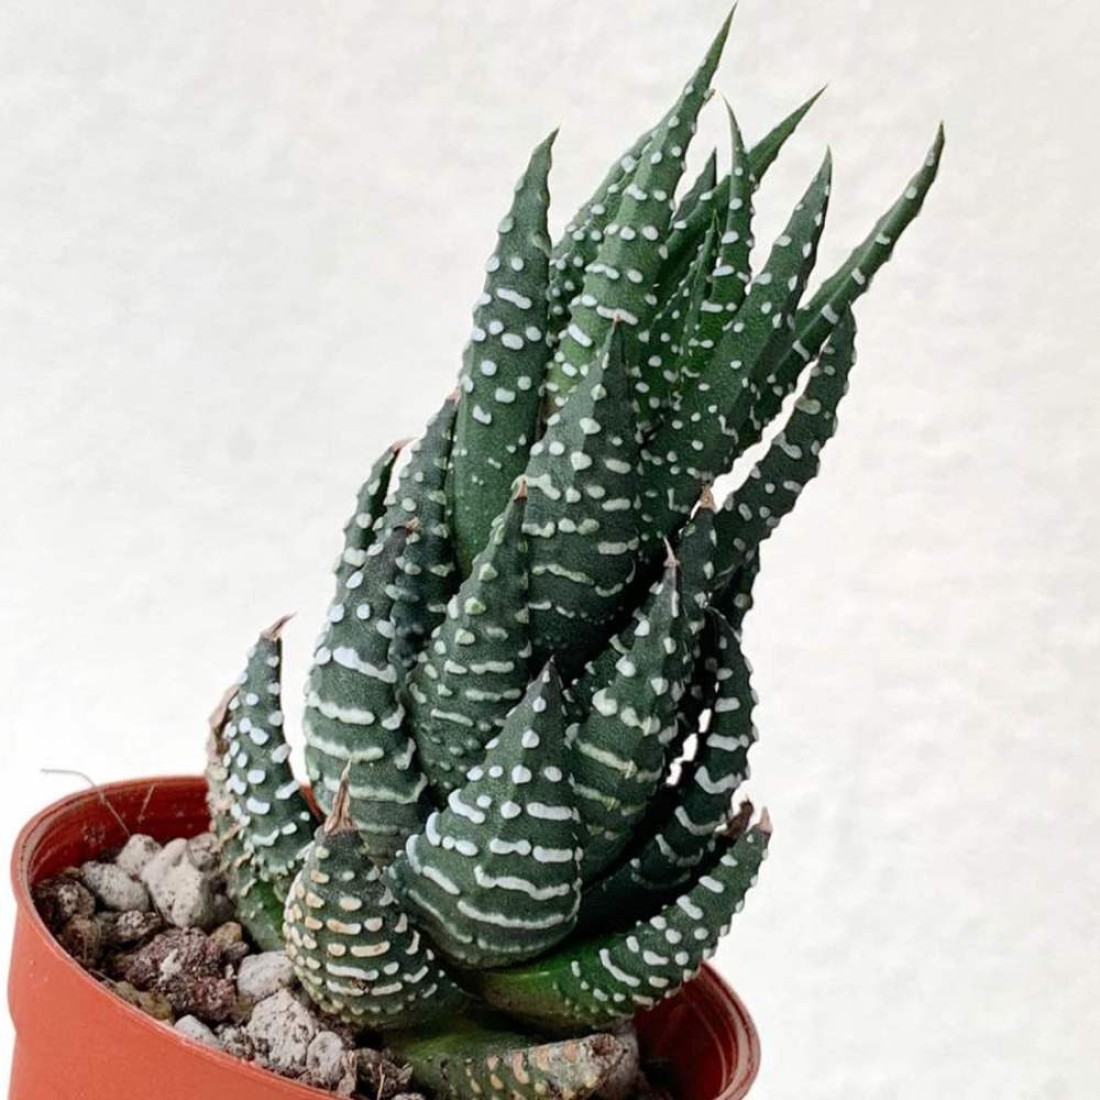 Haworthia coarctata succulent healthy live plant 5 inches in white plastic pot